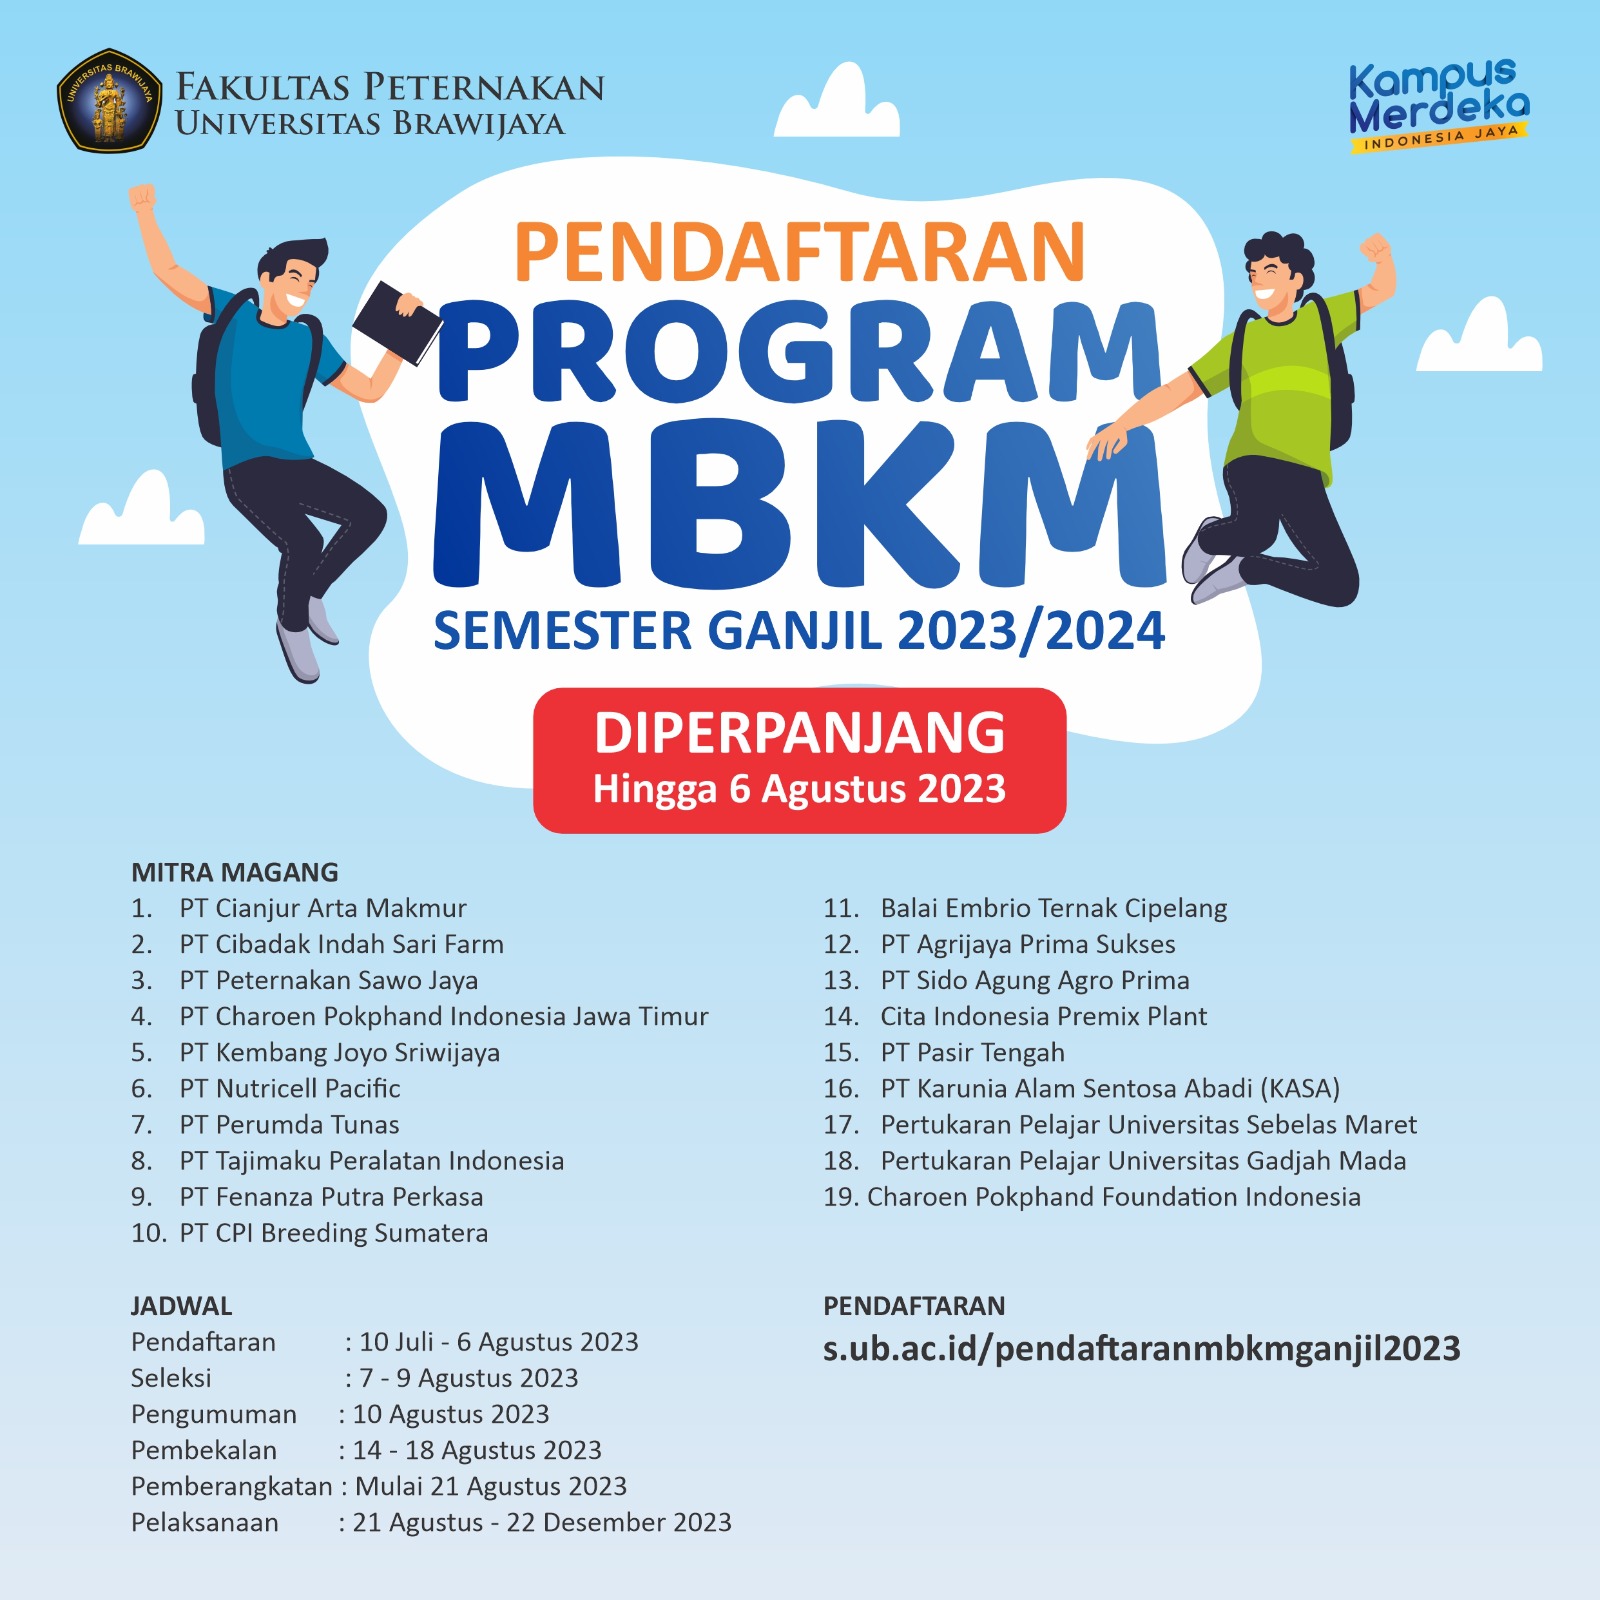 Additional of MBKM Program